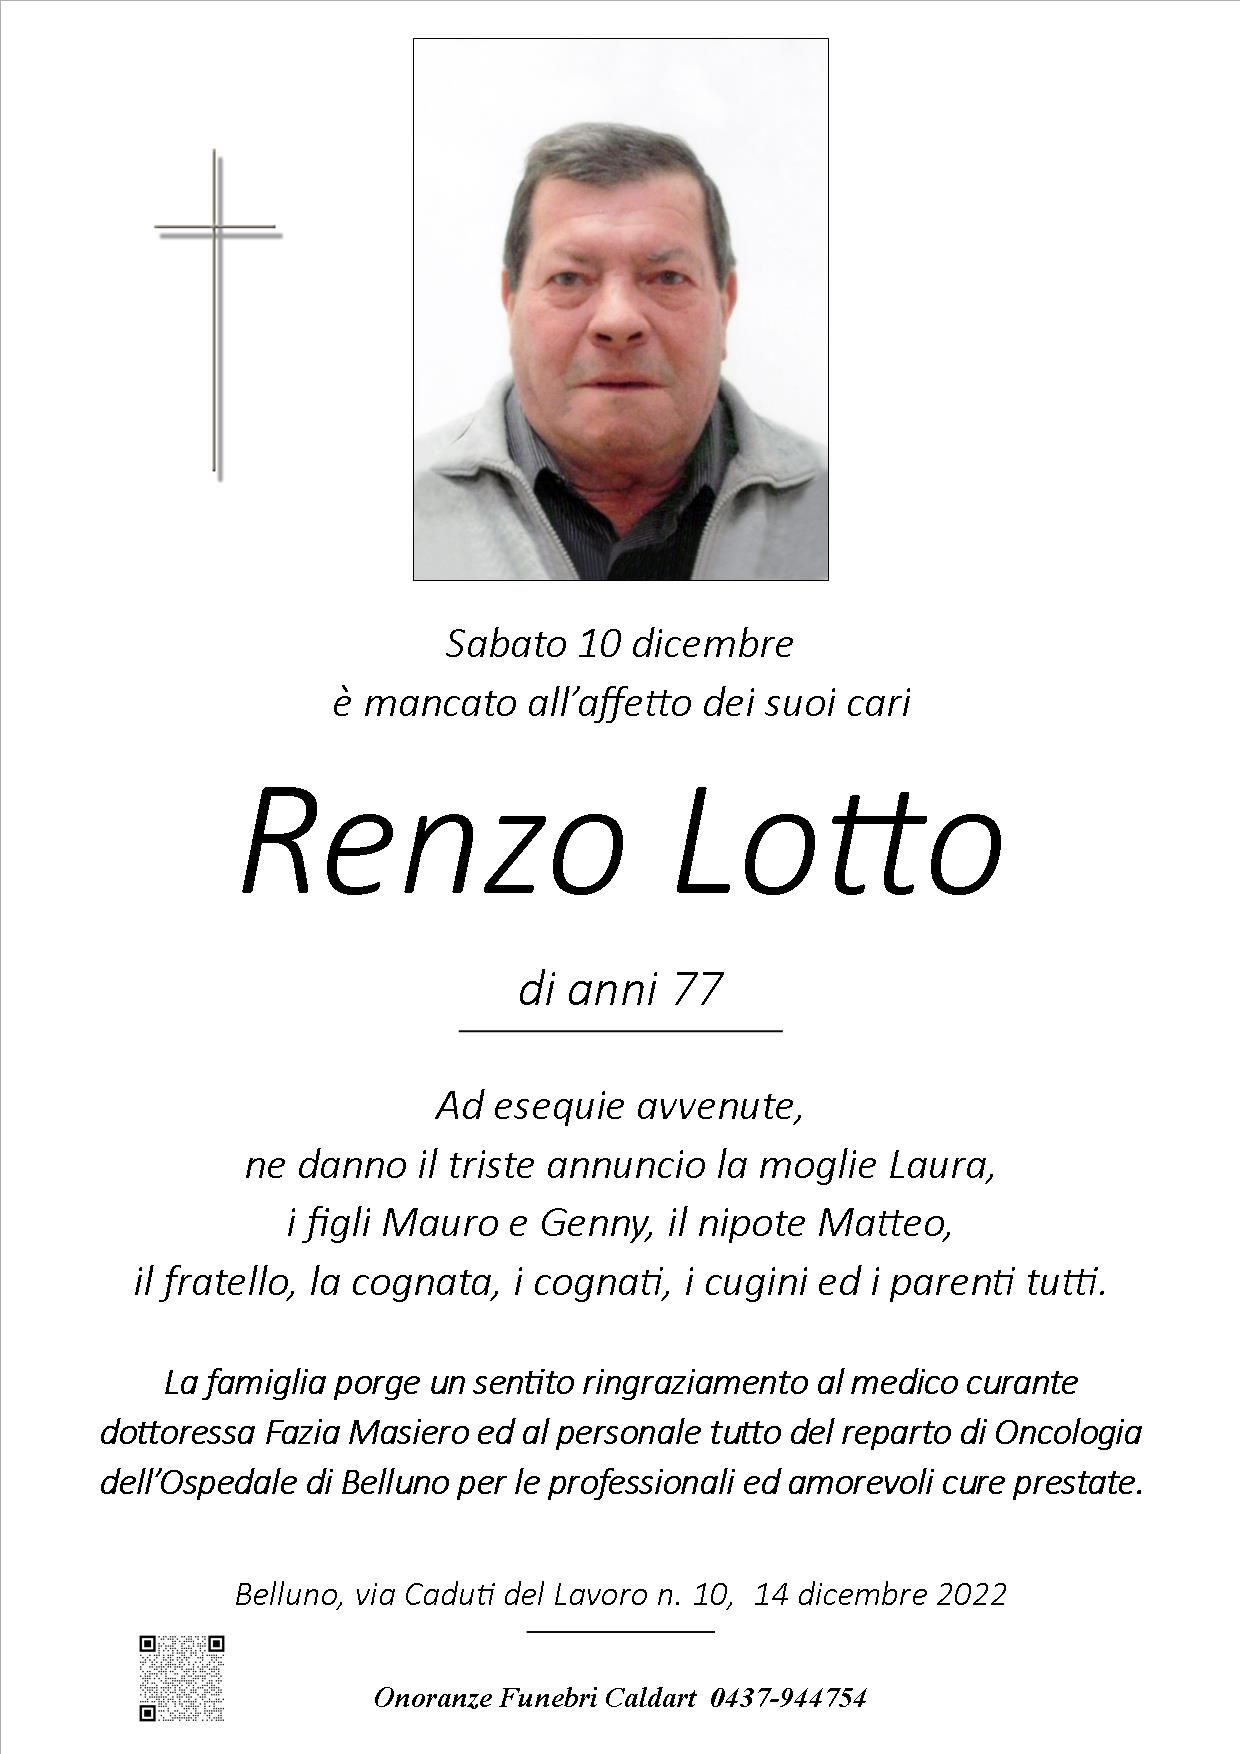 Lotto Renzo